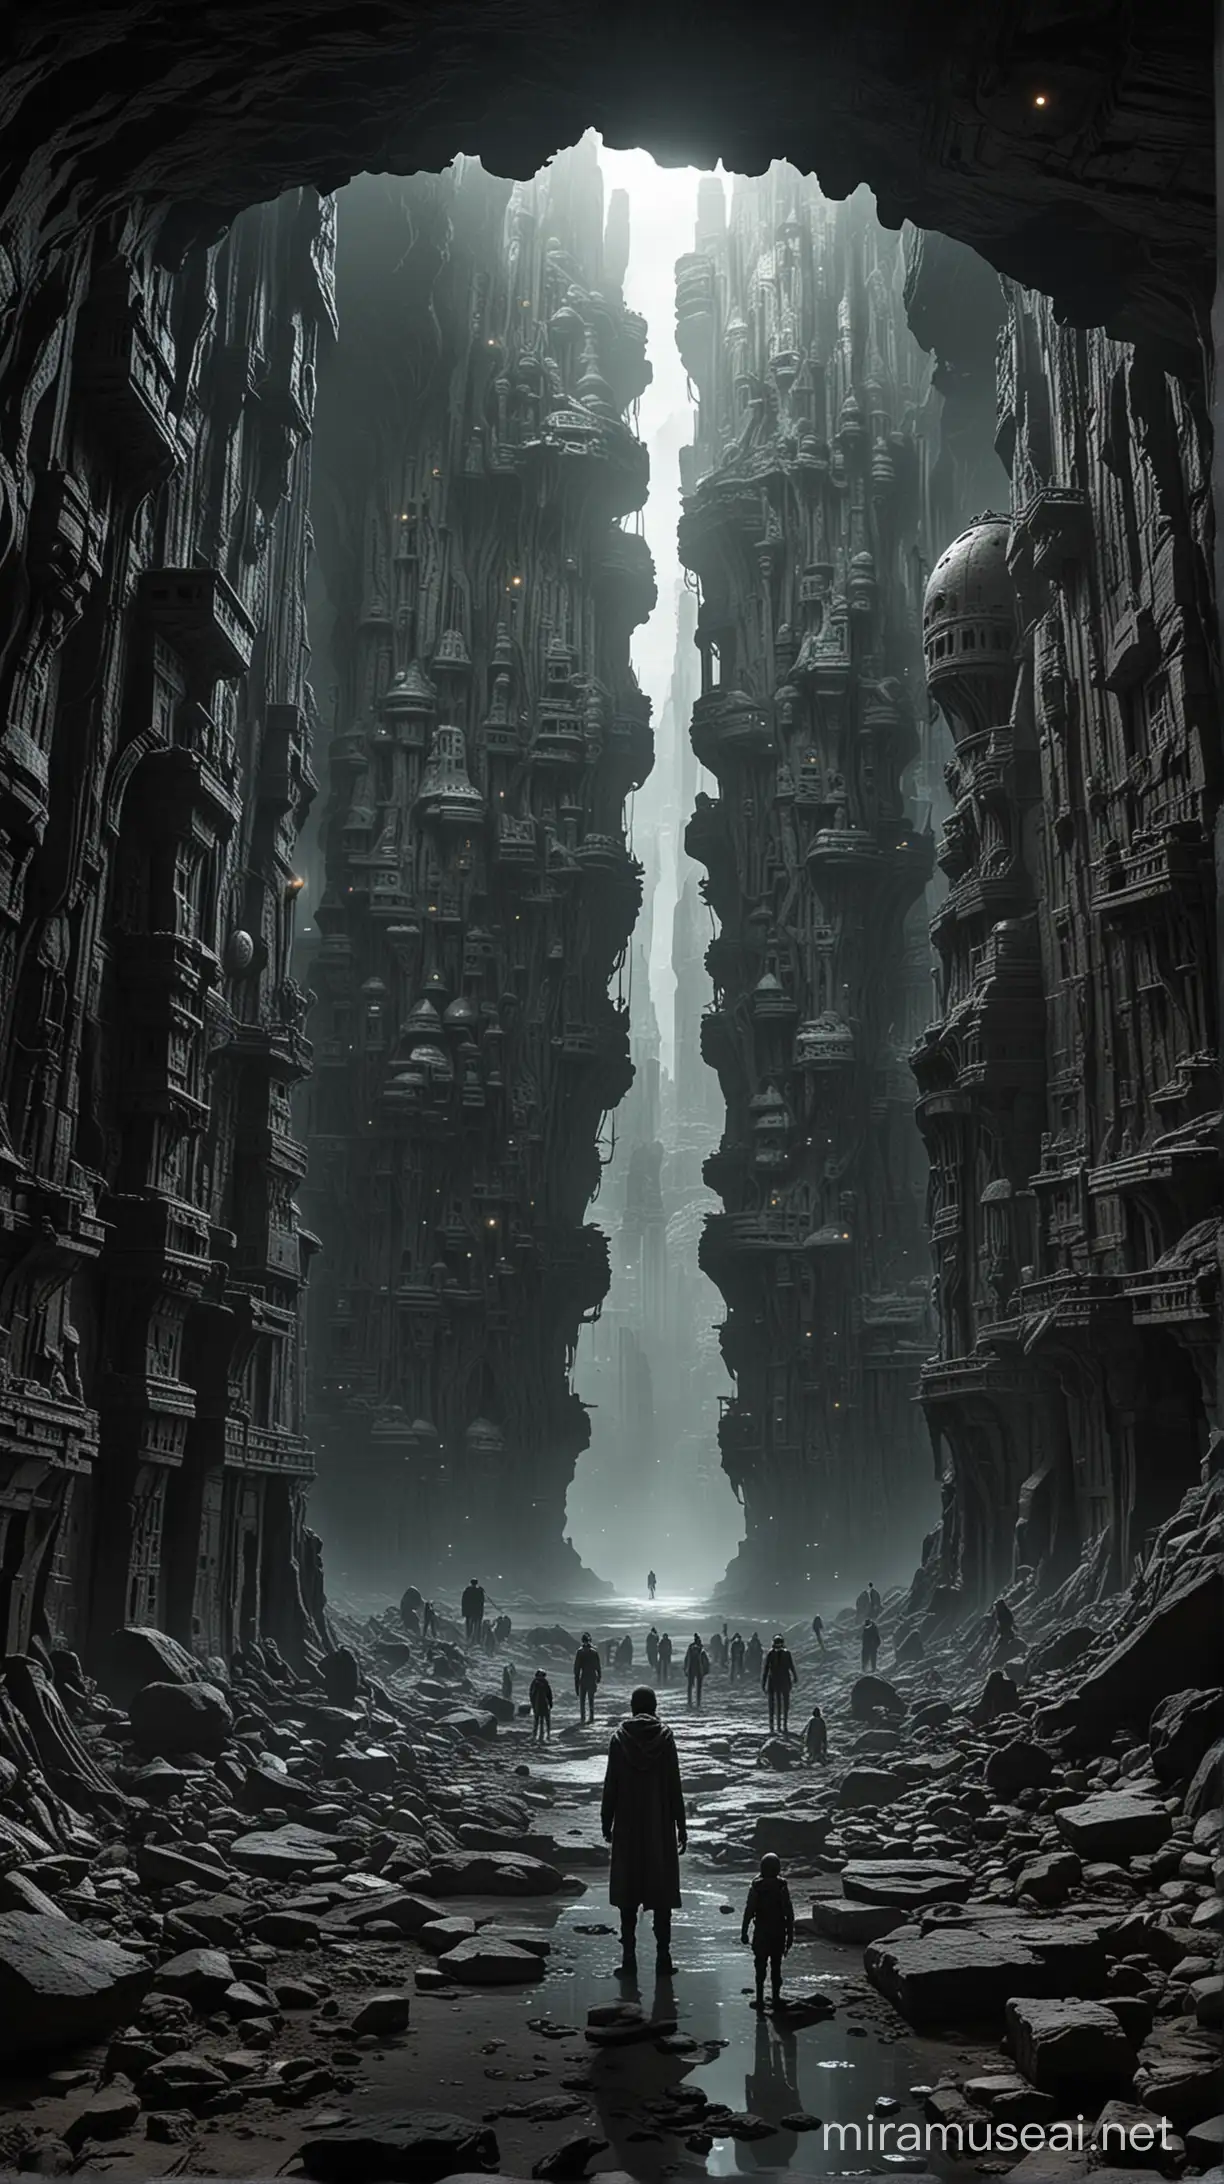 Enigmatic Underground Metropolis with Alien Inhabitants